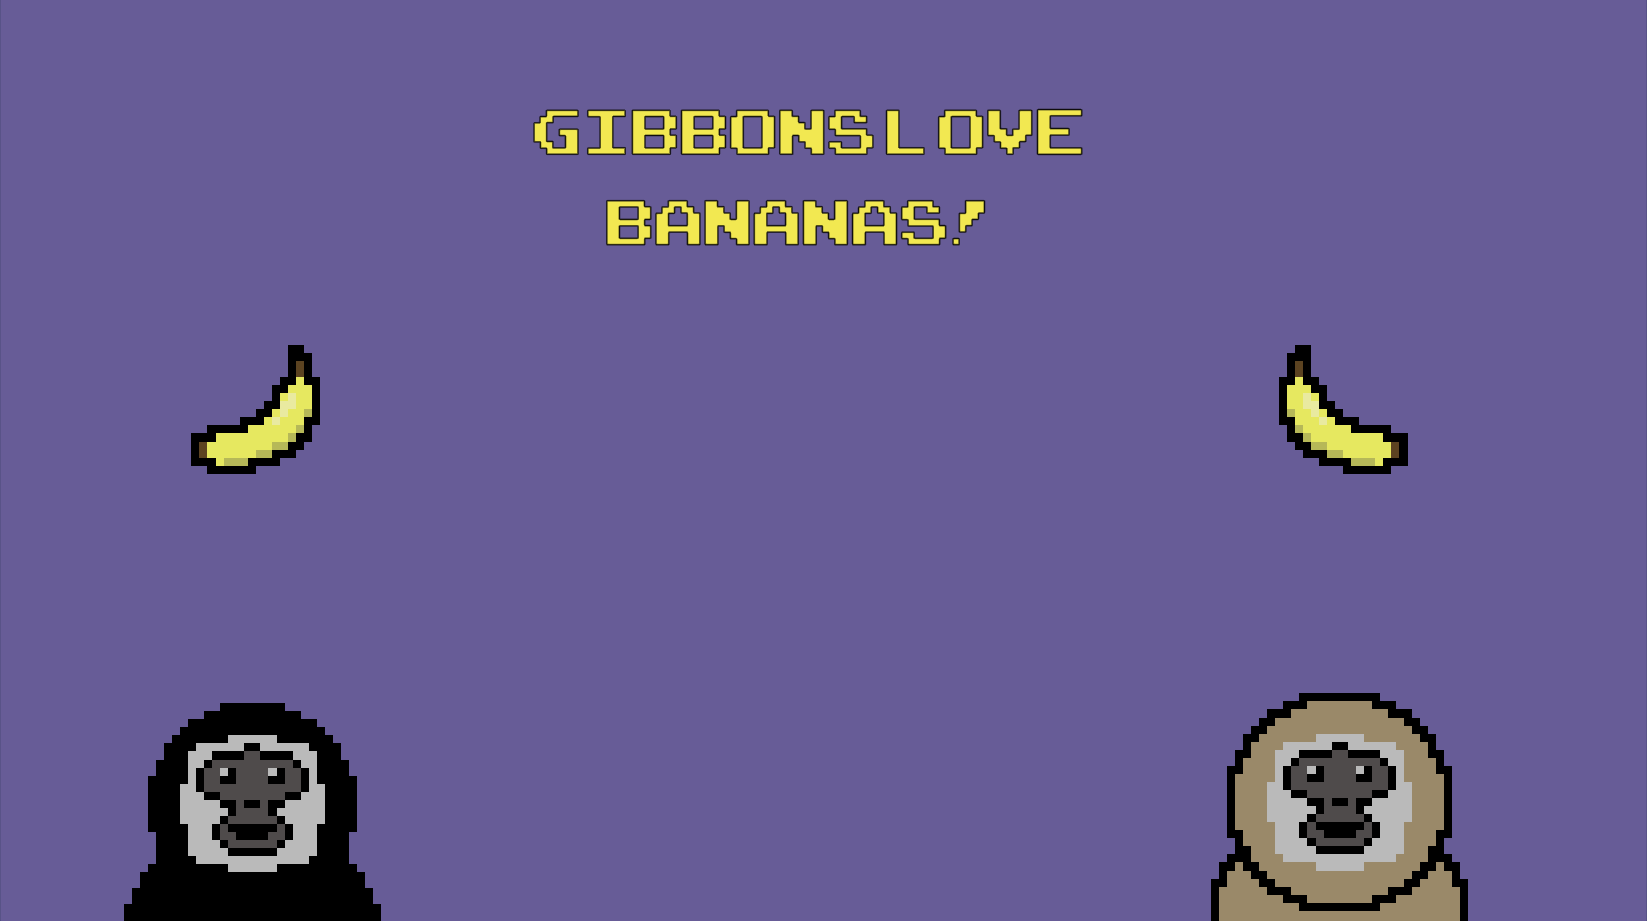 Gibbons Love Bananas!